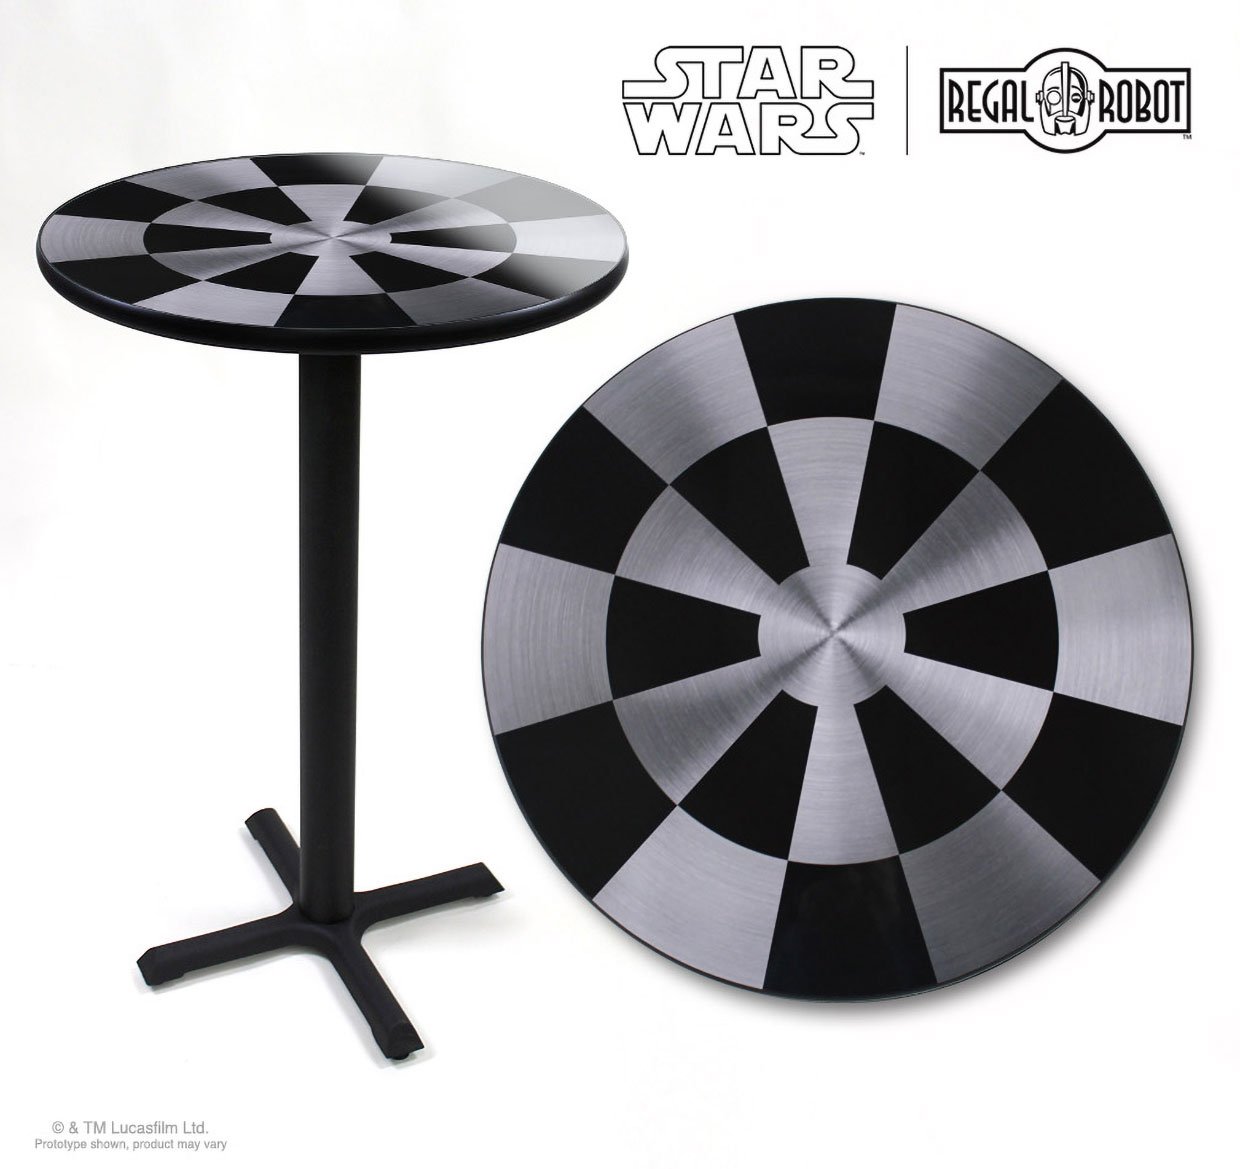 Star Wars Cafe Tables